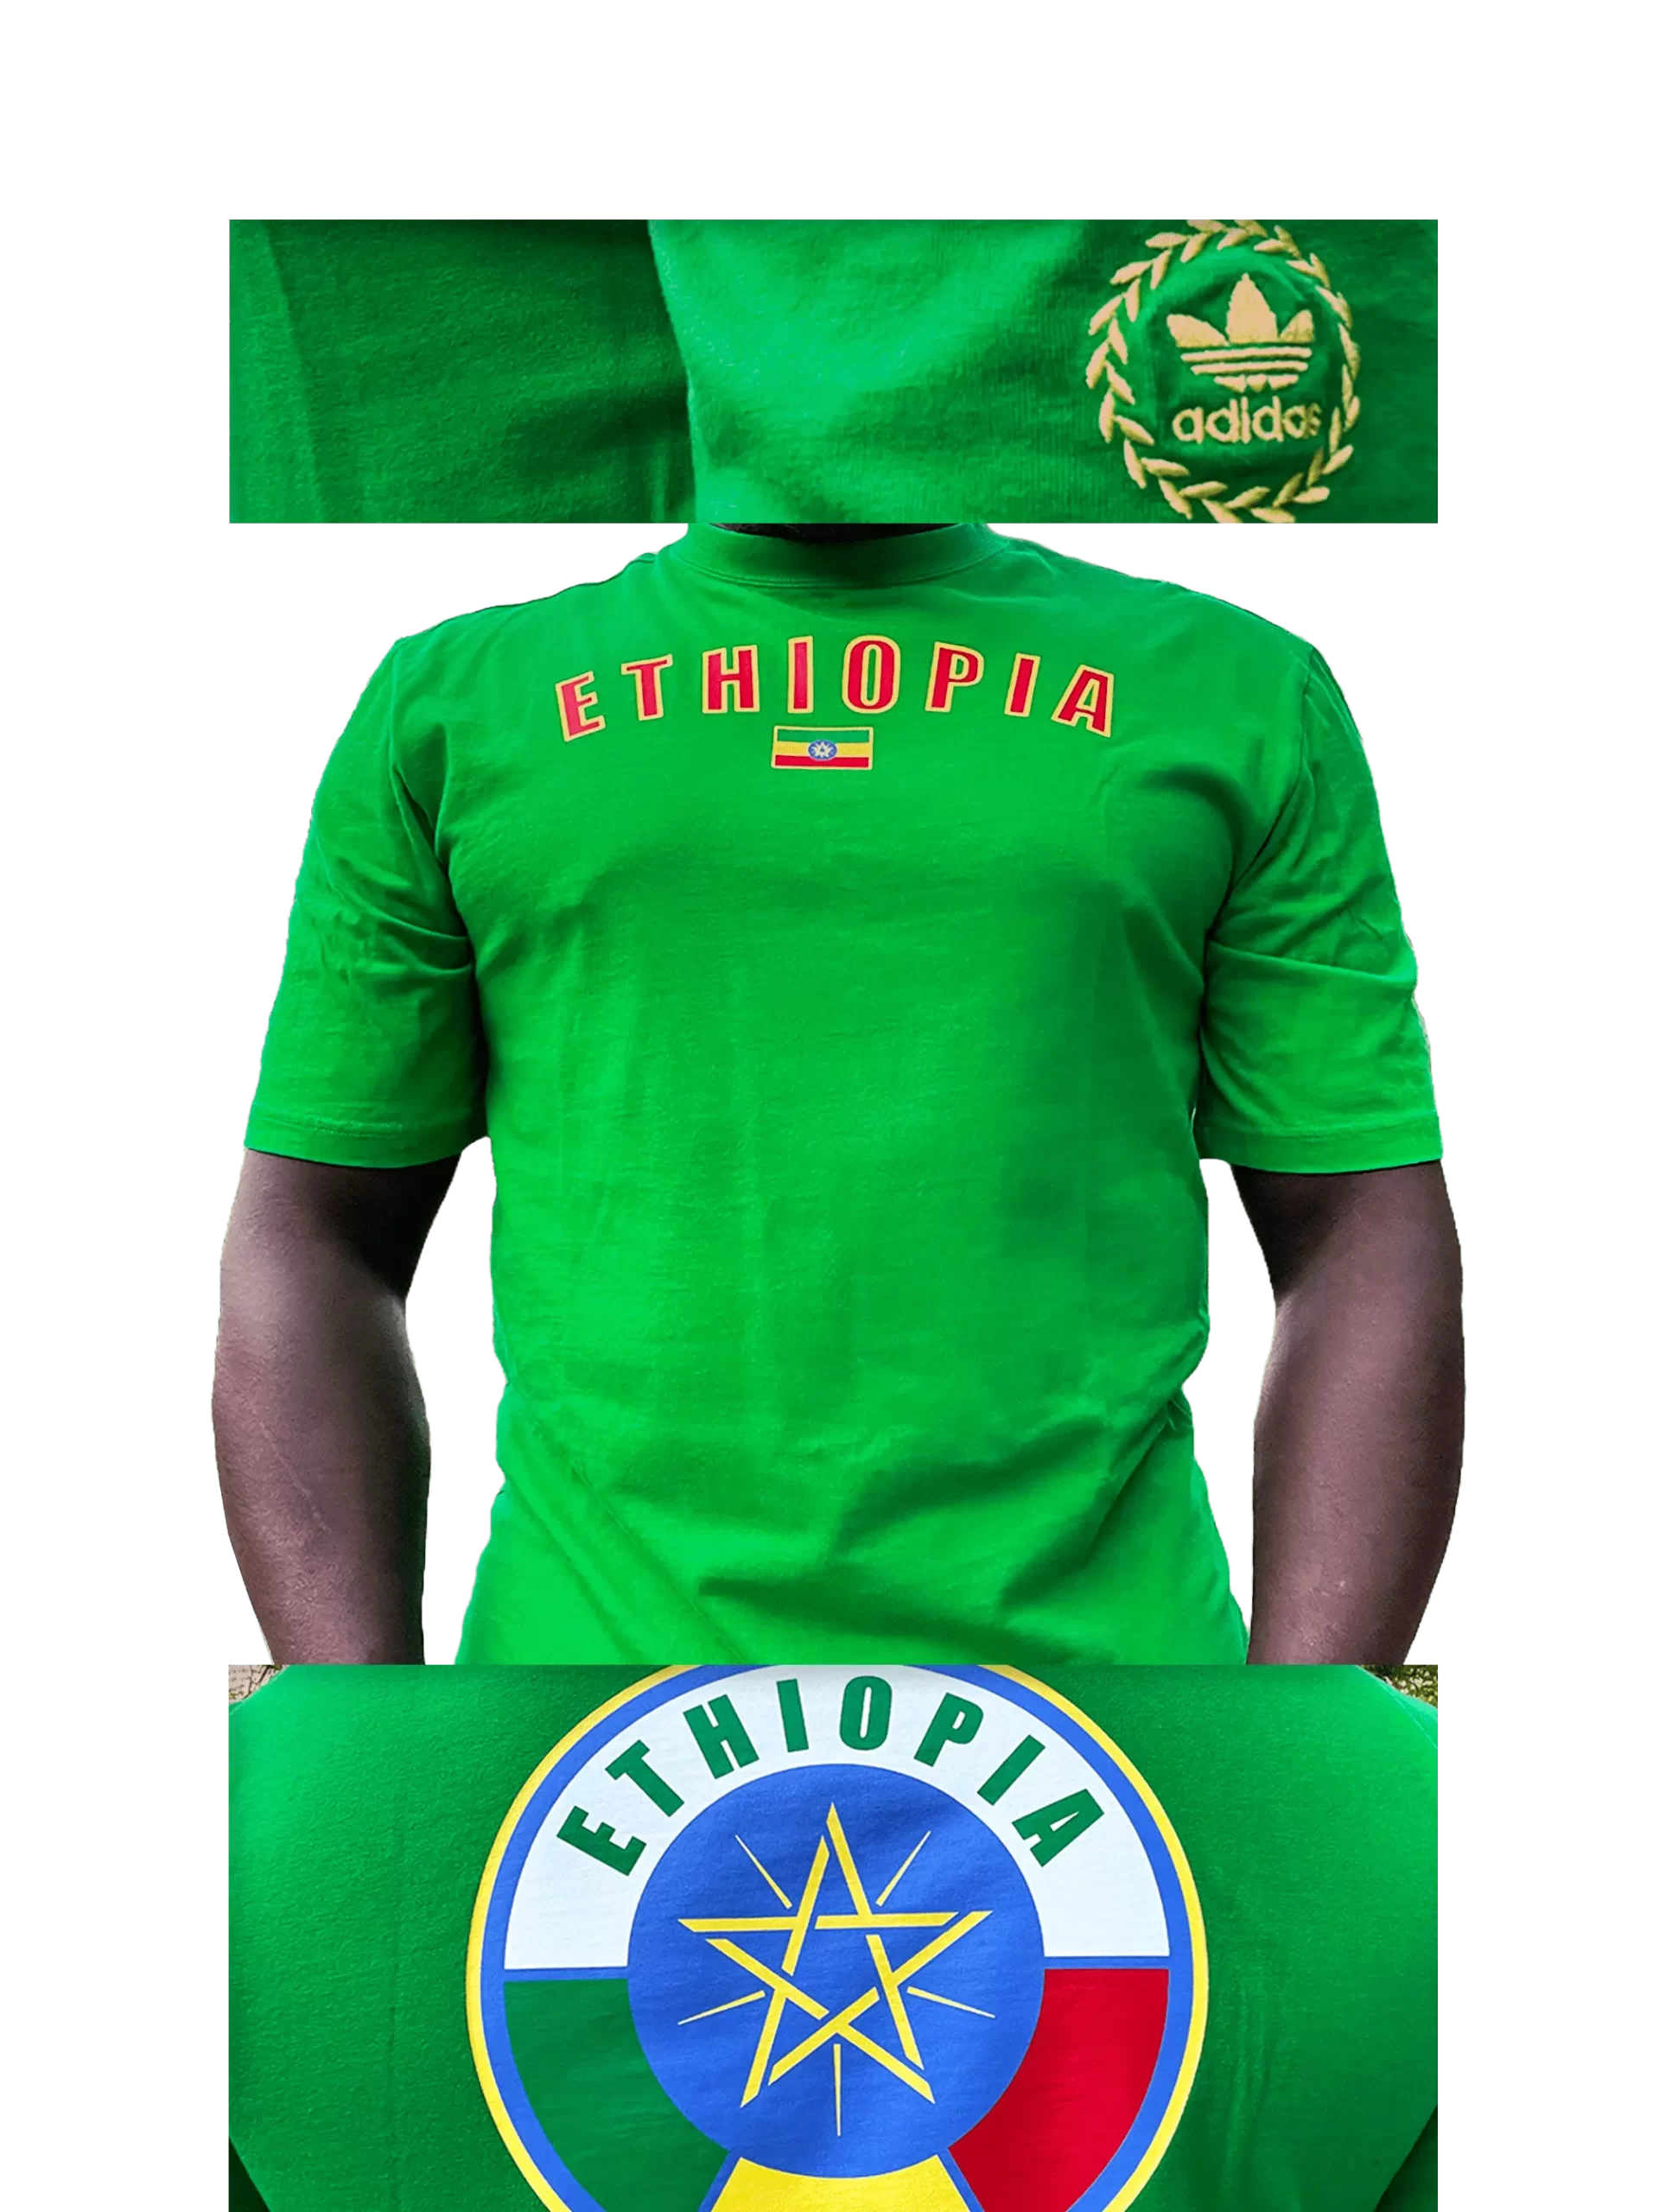 Men's 2008 Ethiopia T-Shirt by Adidas Originals: Spontaneous